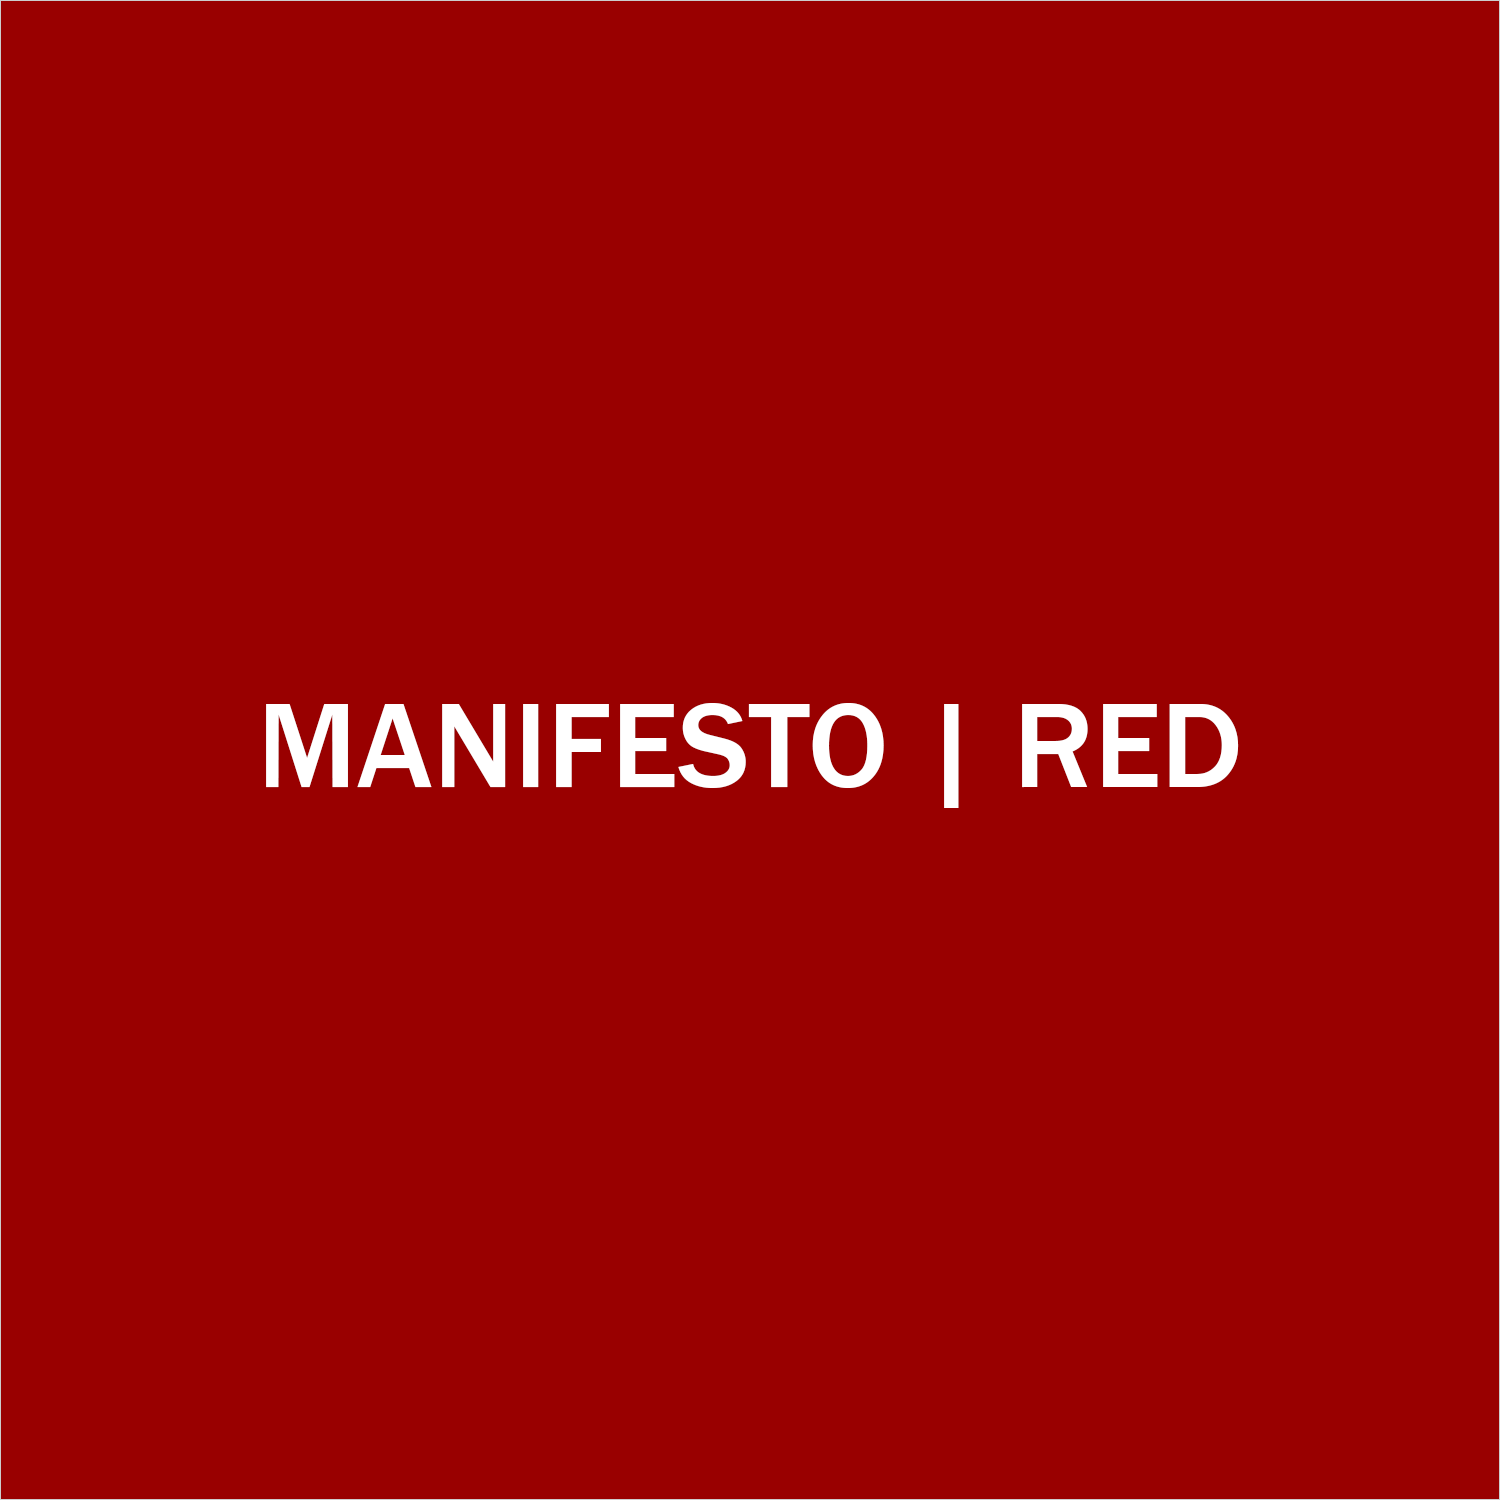 MANIFESTO | RED